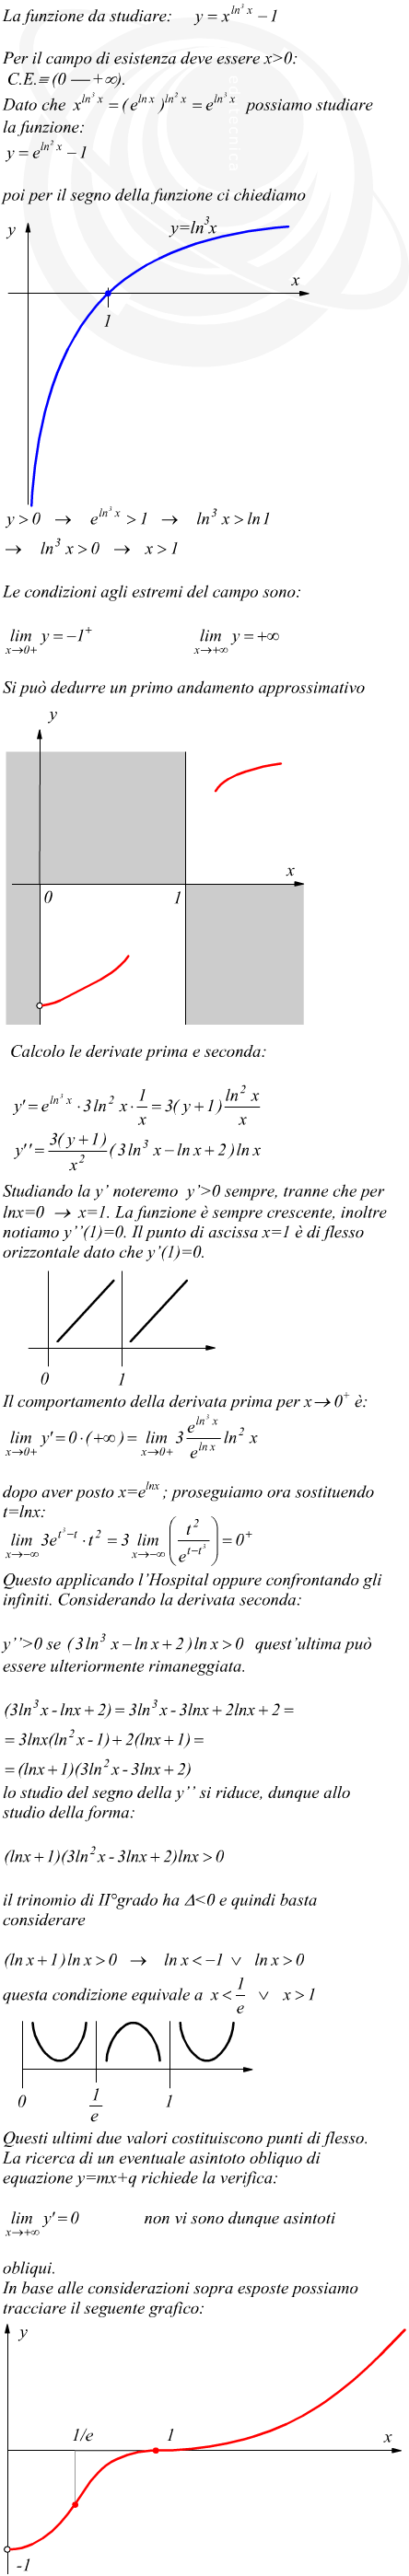 Studio di funzione esponenziale e logaritmica